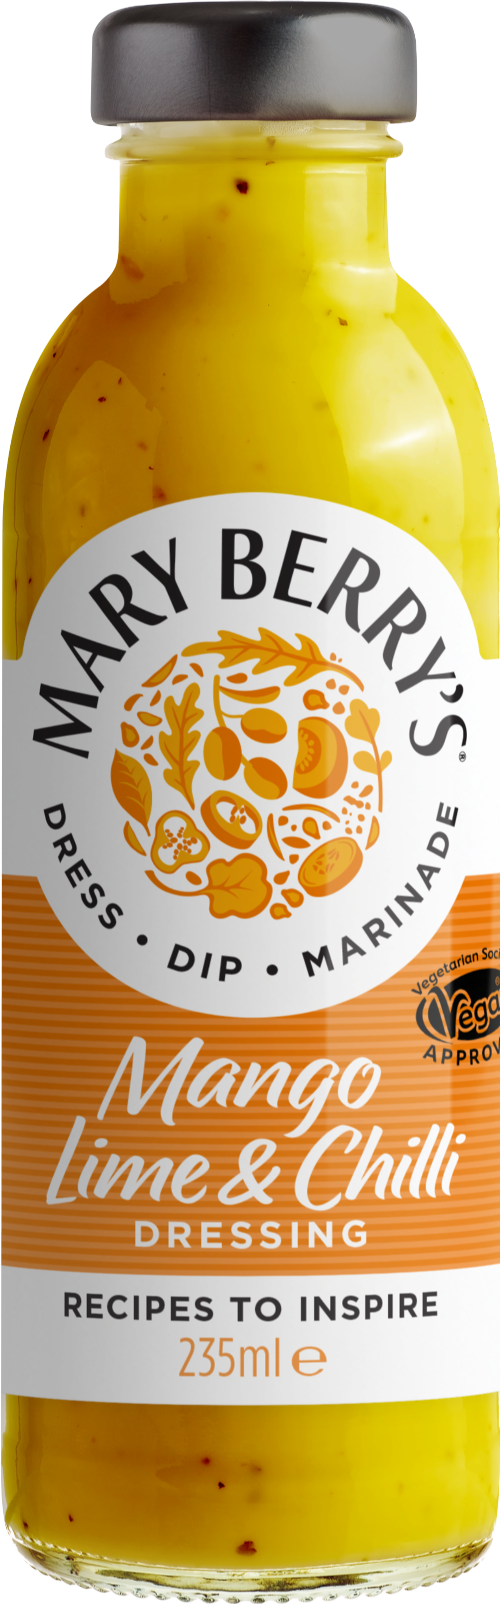 MARY BERRY Mango, Lime & Chilli Dressing 235ml